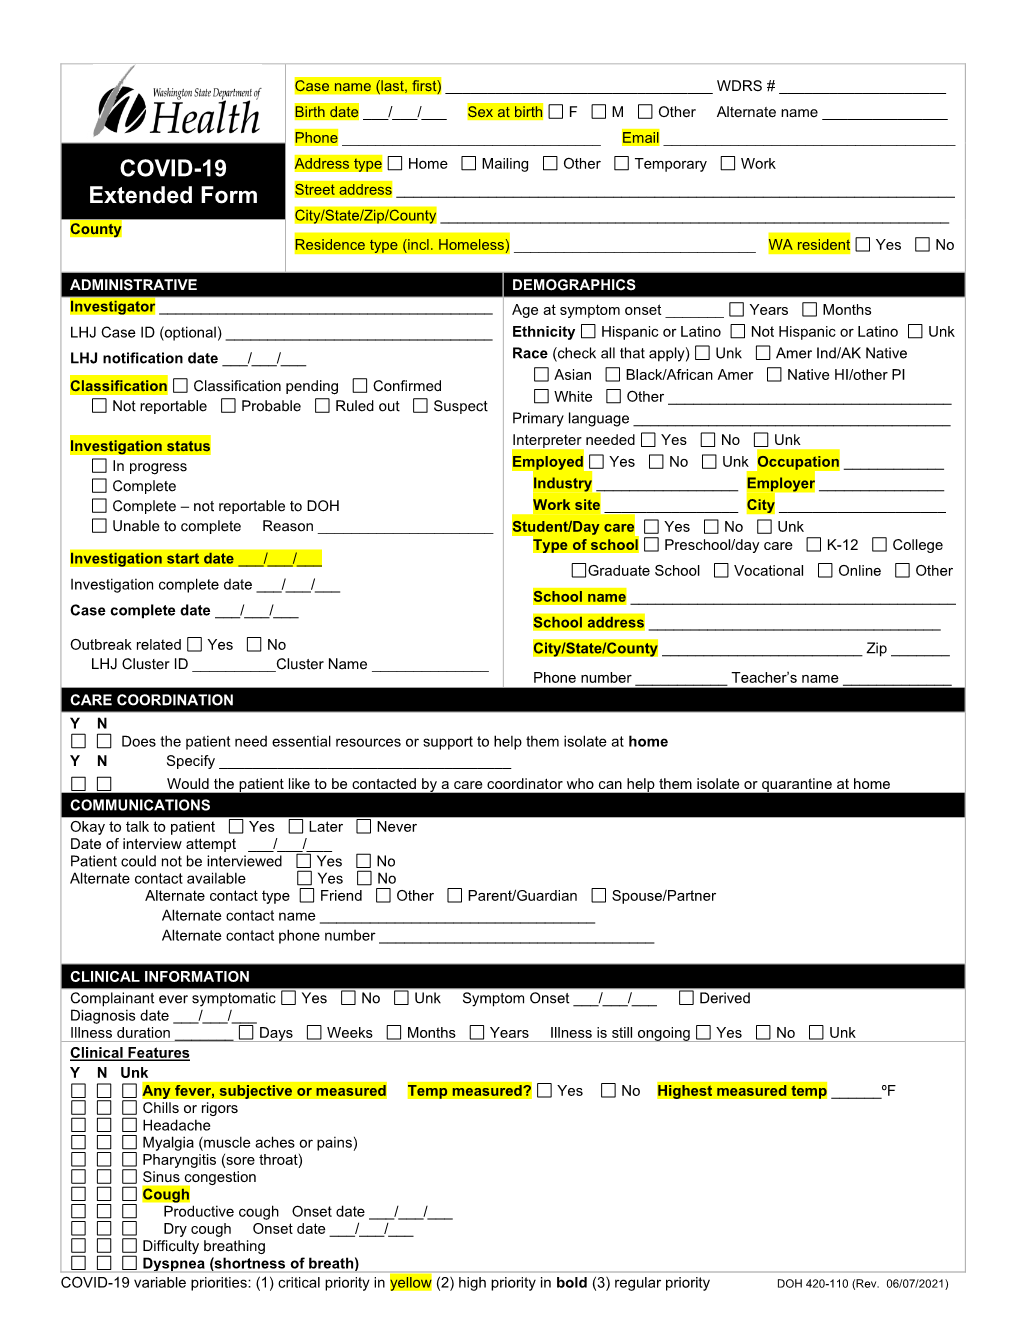 COVID-19 Reporting Form (PDF)